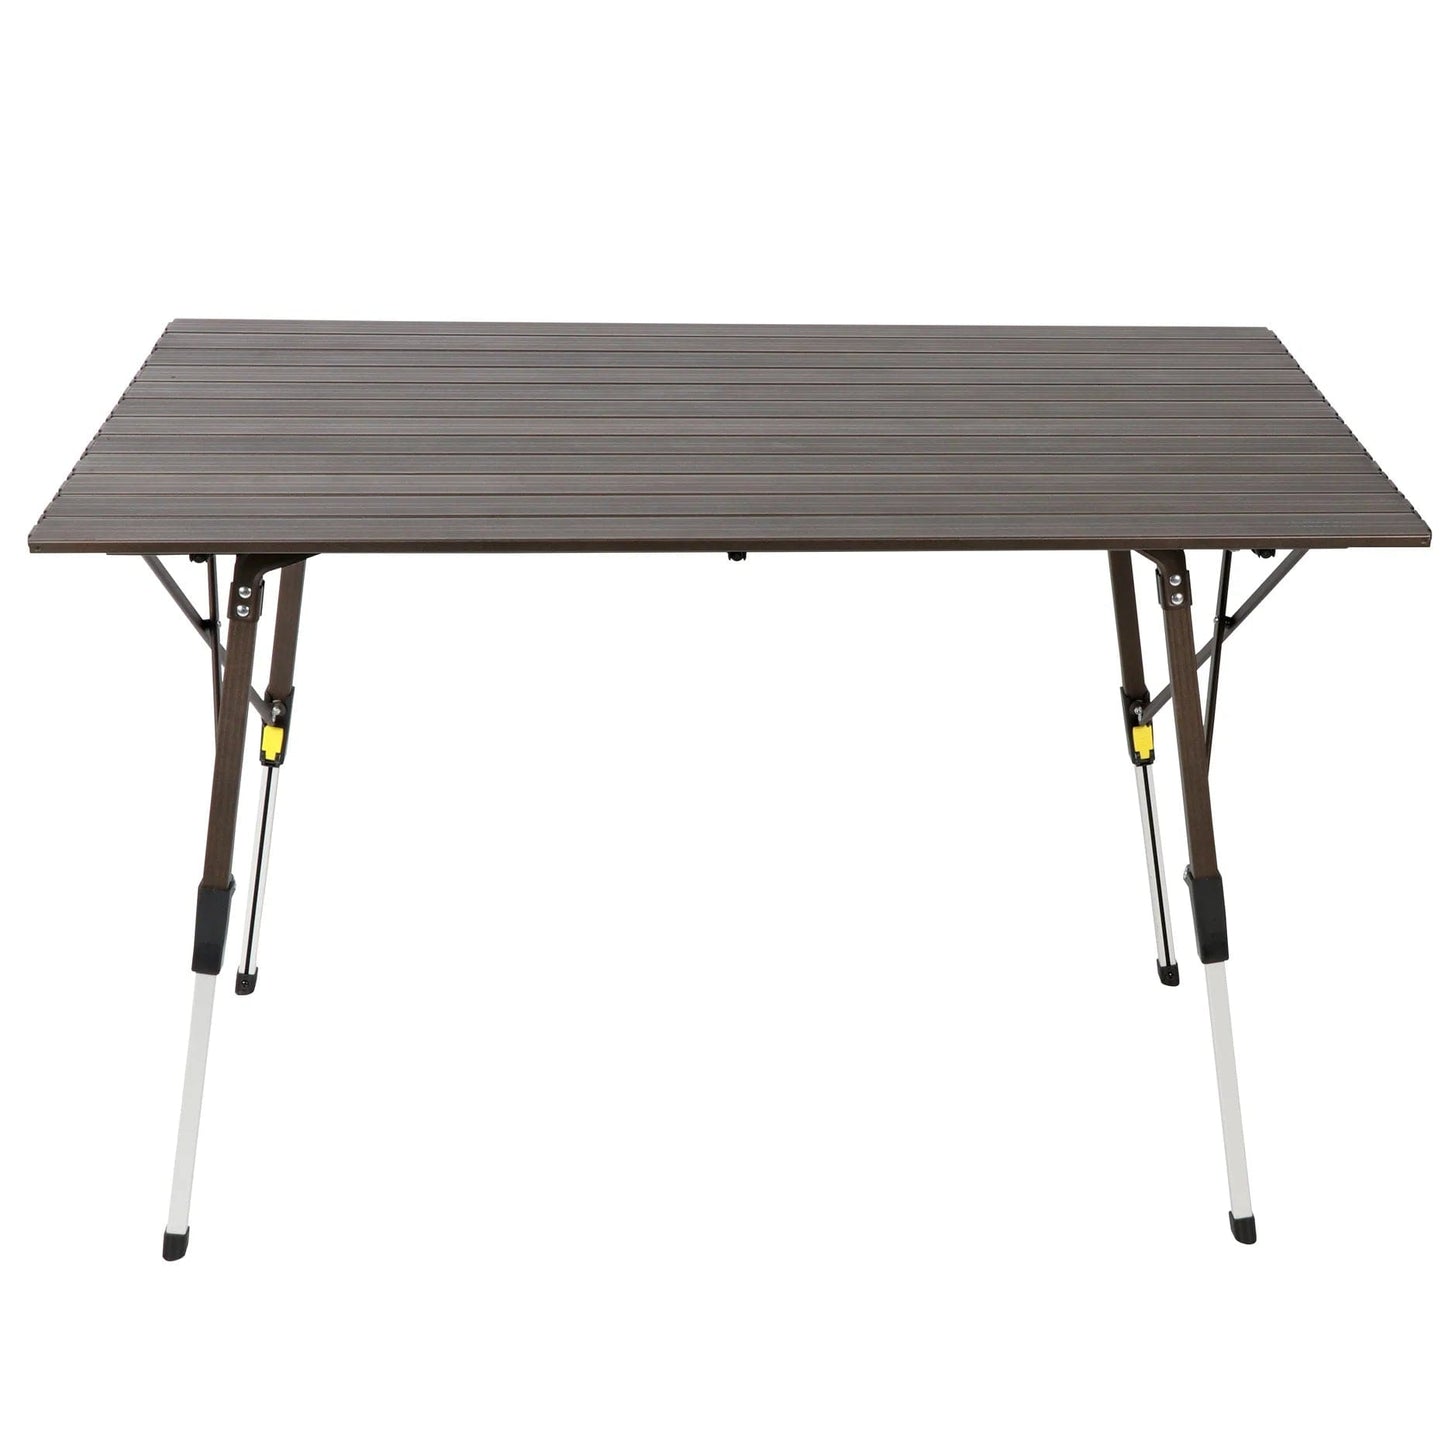 Timber Ridge Adjustable Height Folding Camp Table